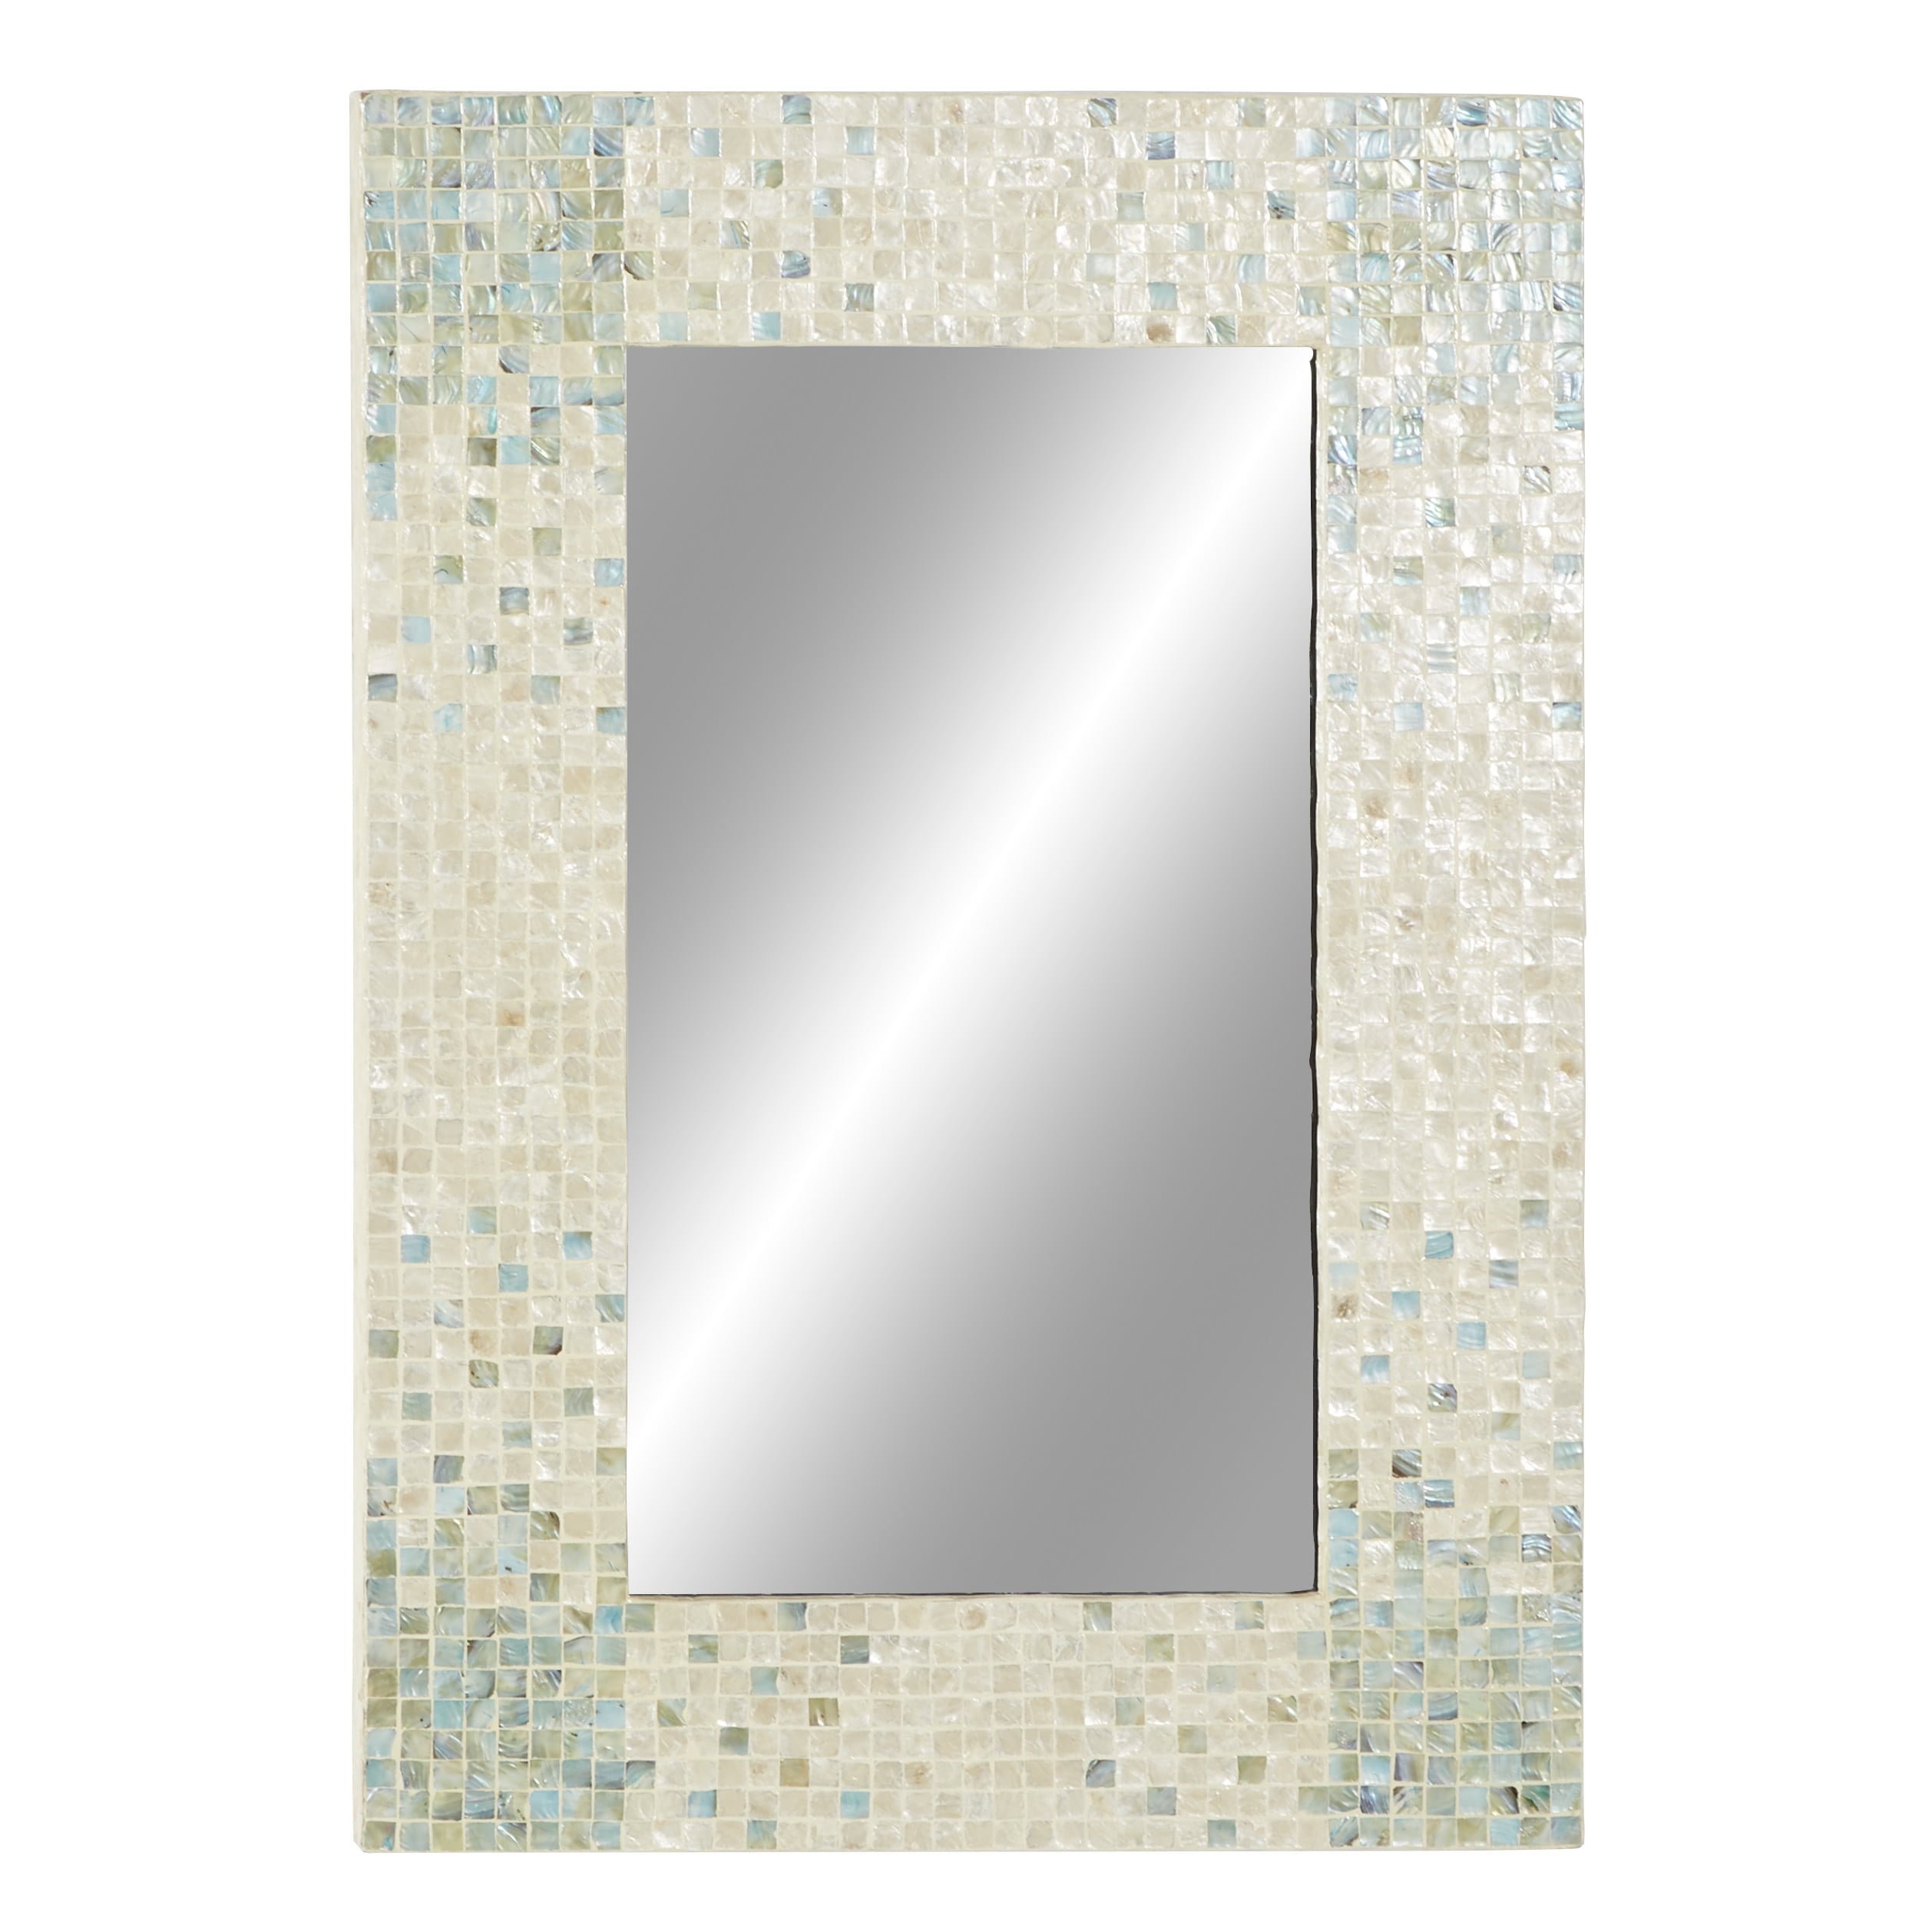 Blue Mirror Sheet Plexiglass 24 X 24 Inches Corner Cobalt Blue Shatterproof  Mirror Plastic Mirrors For Wall Blue Plexiglass Sheet For Decoration,  Craft, Home Decor 